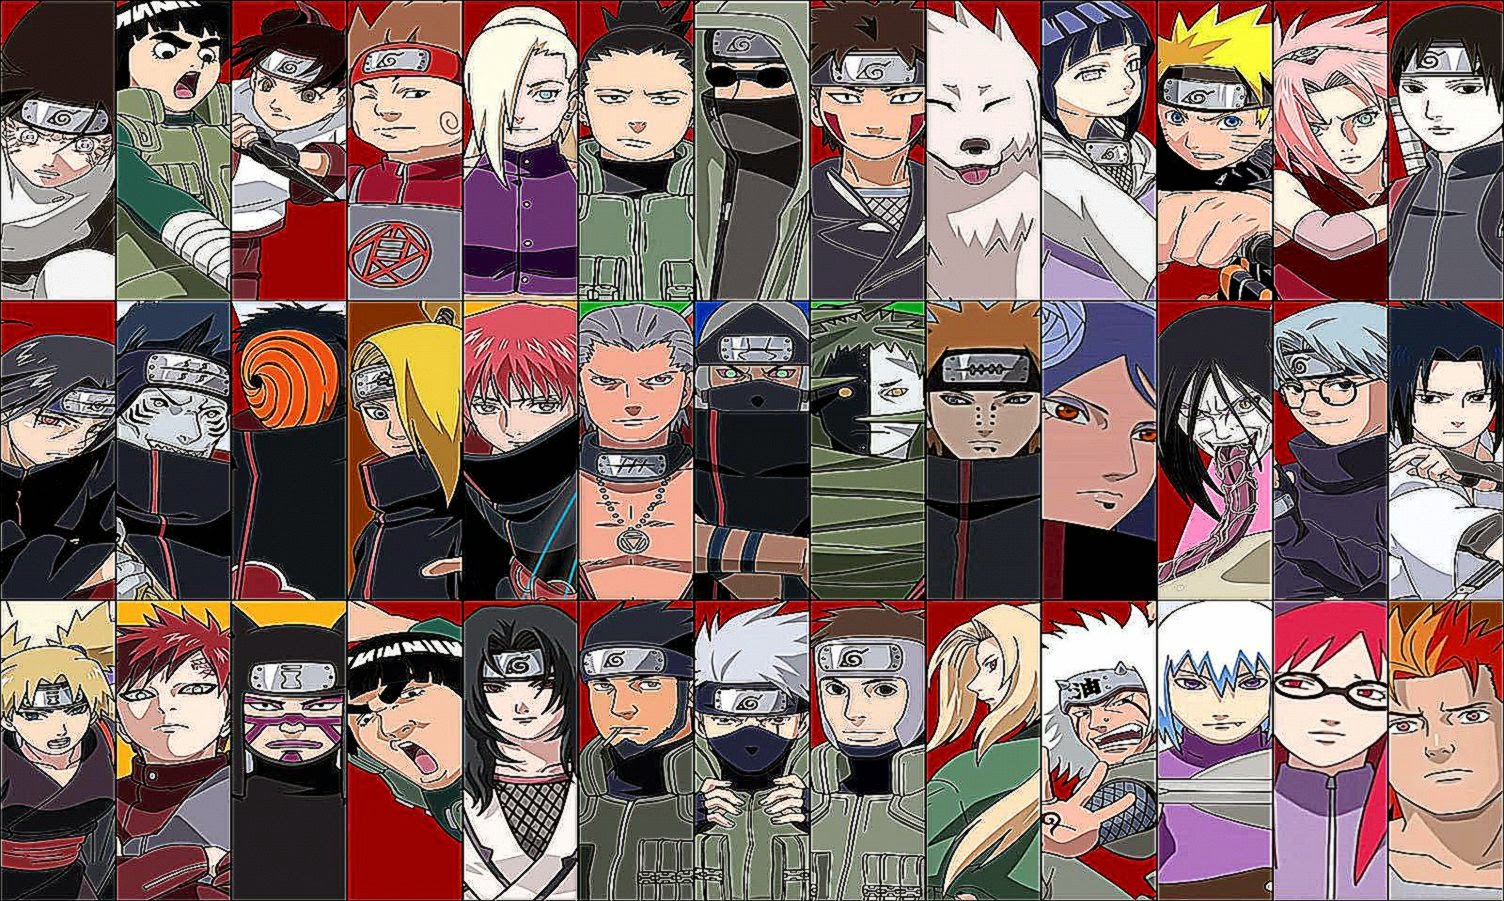 Naruto Shippuden Characters Wallpaper HD Background